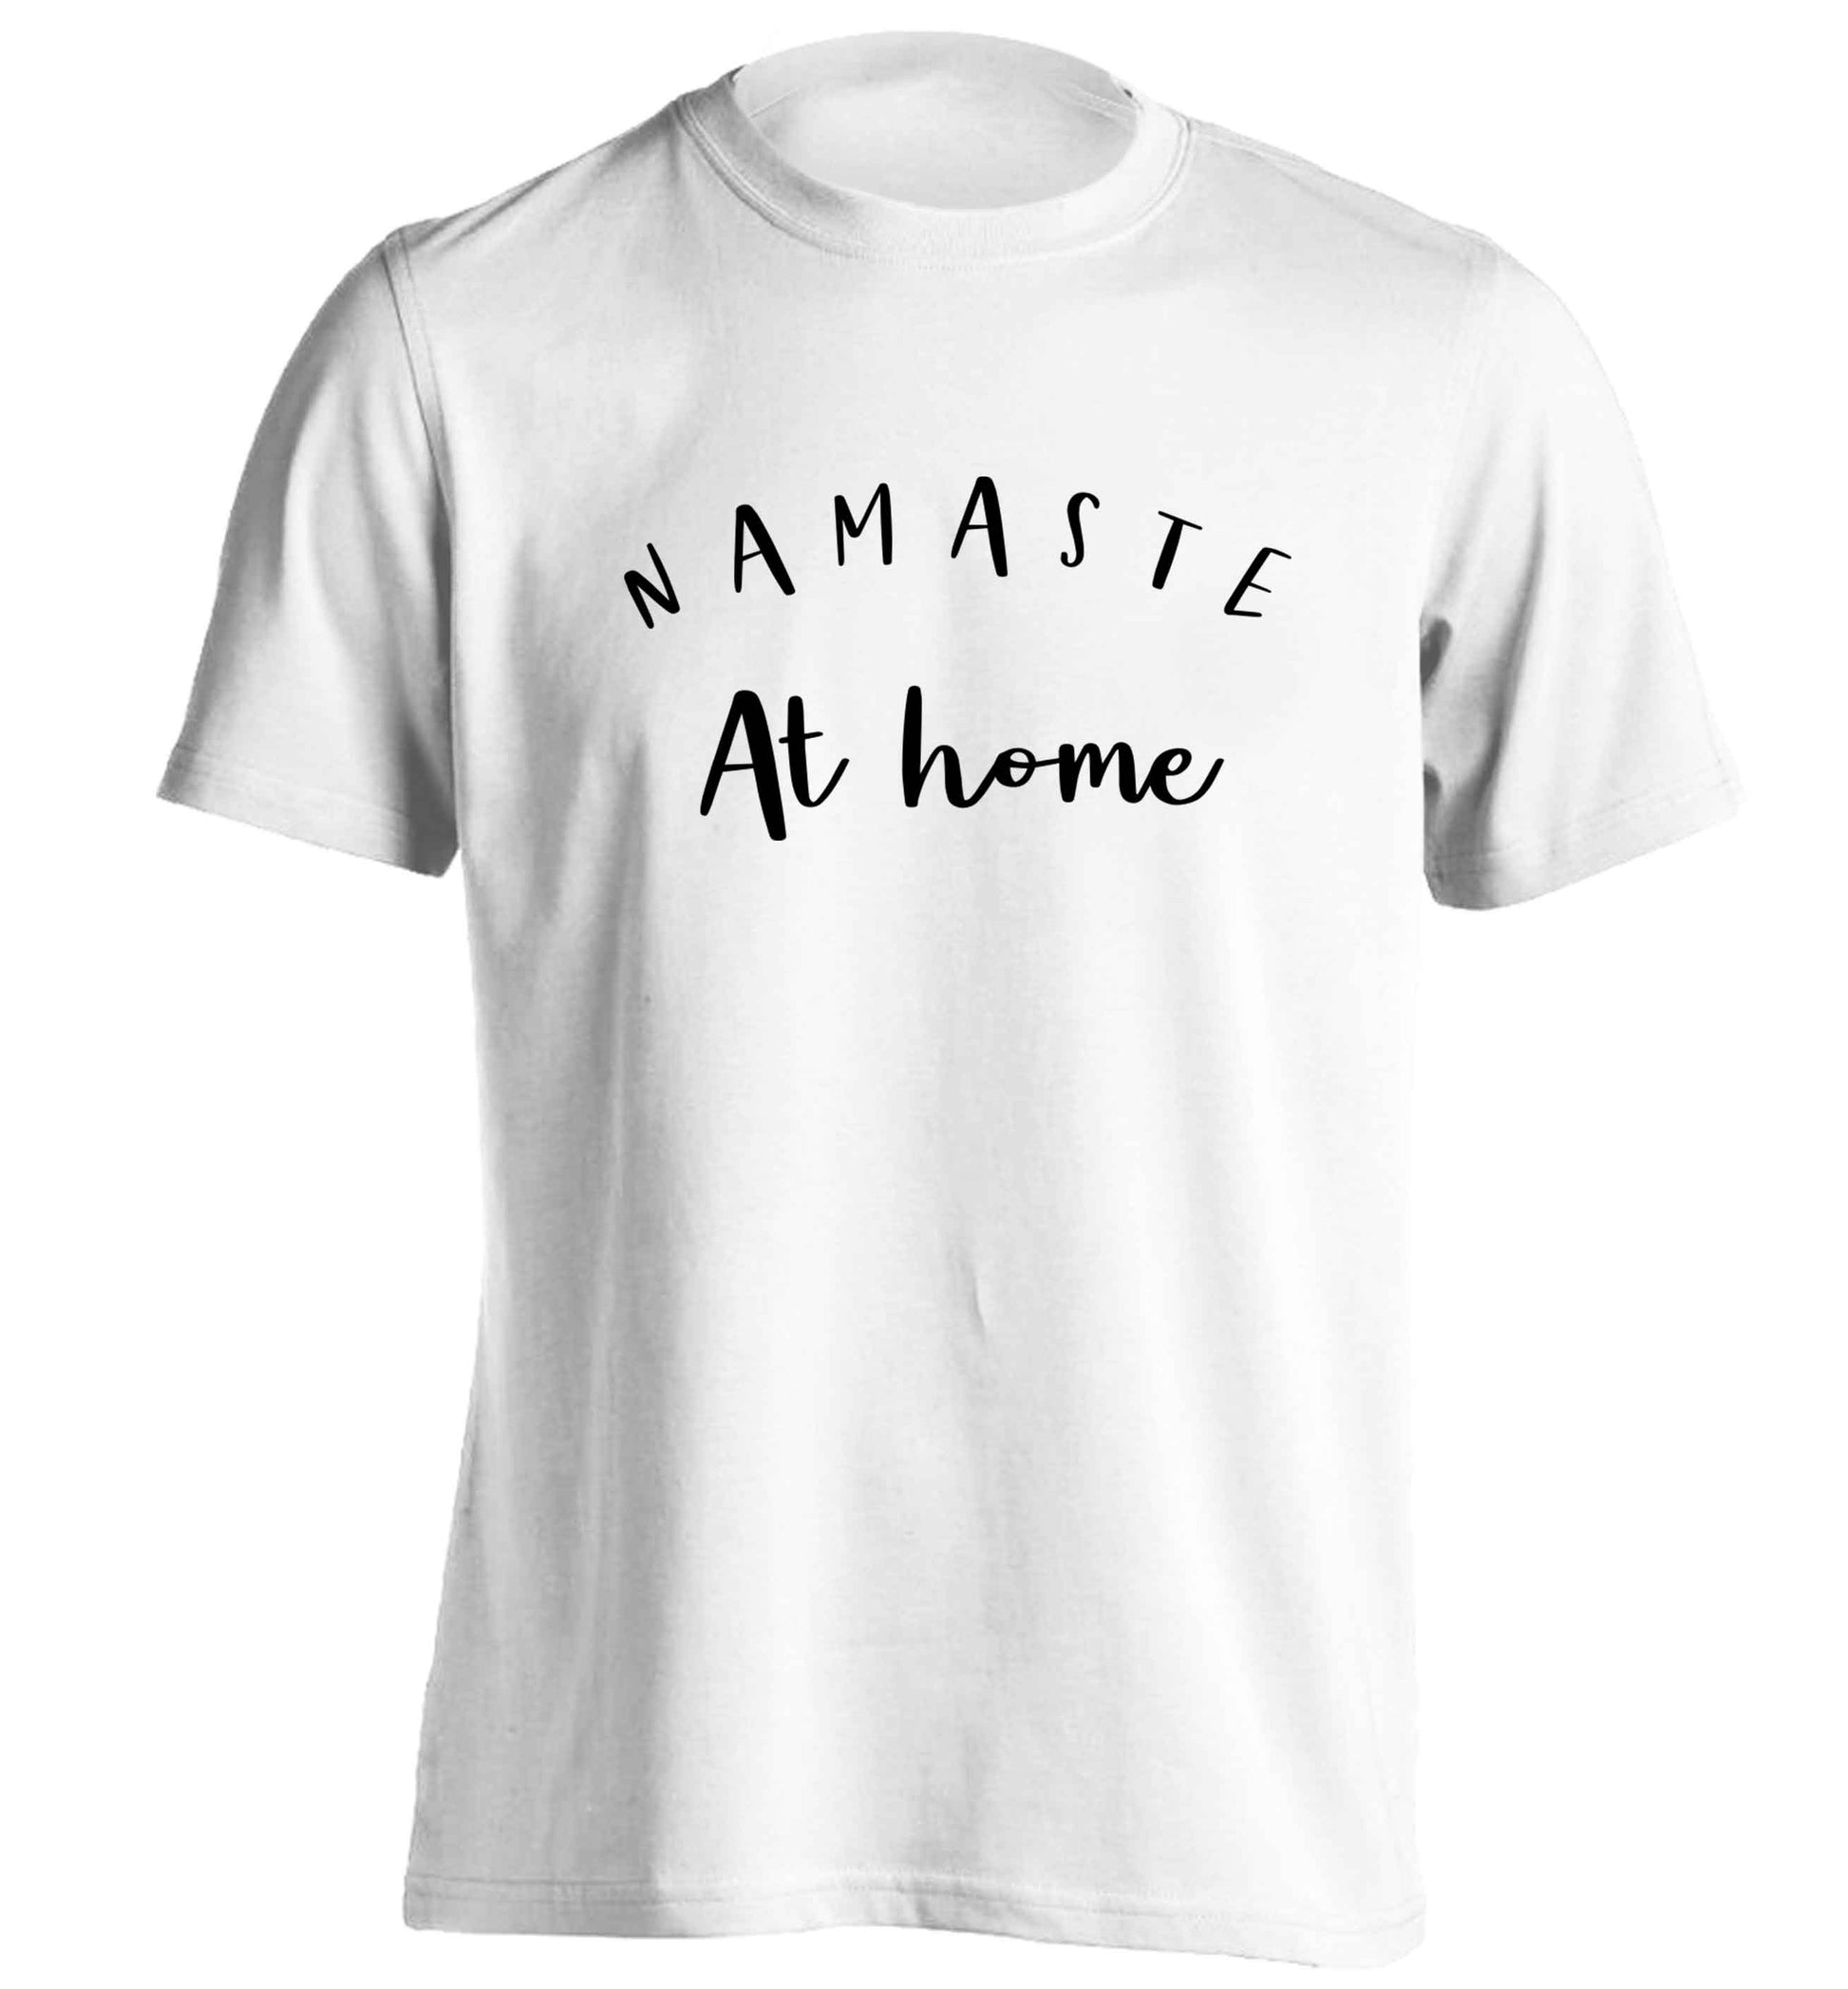 Namaste at home adults unisex white Tshirt 2XL